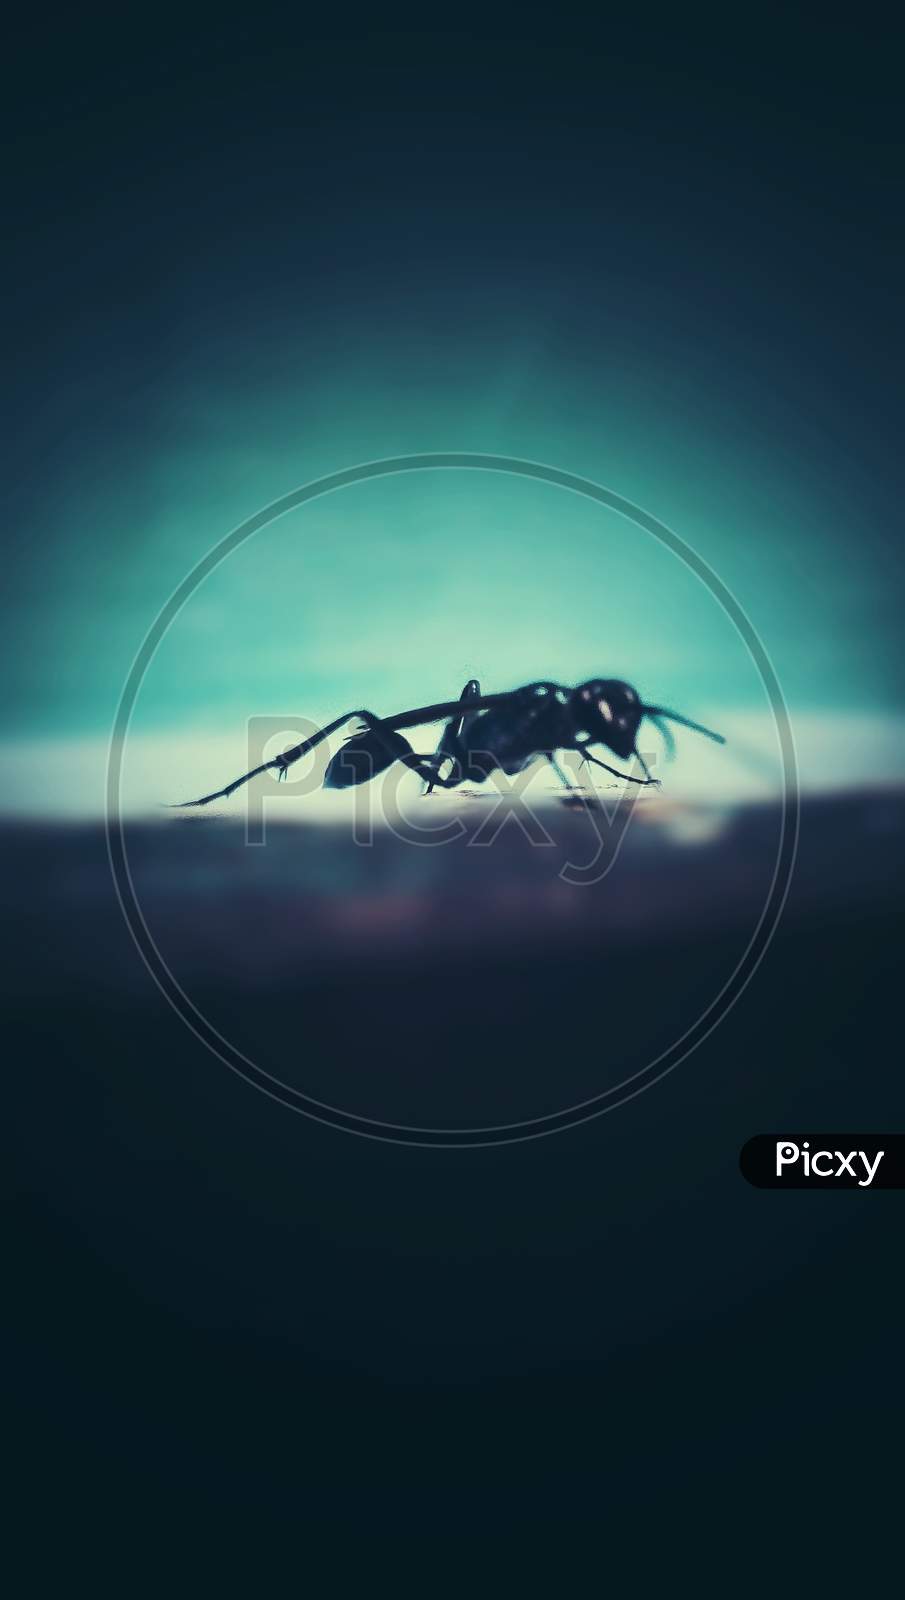 Insect ant flying bug pest pesticides corona